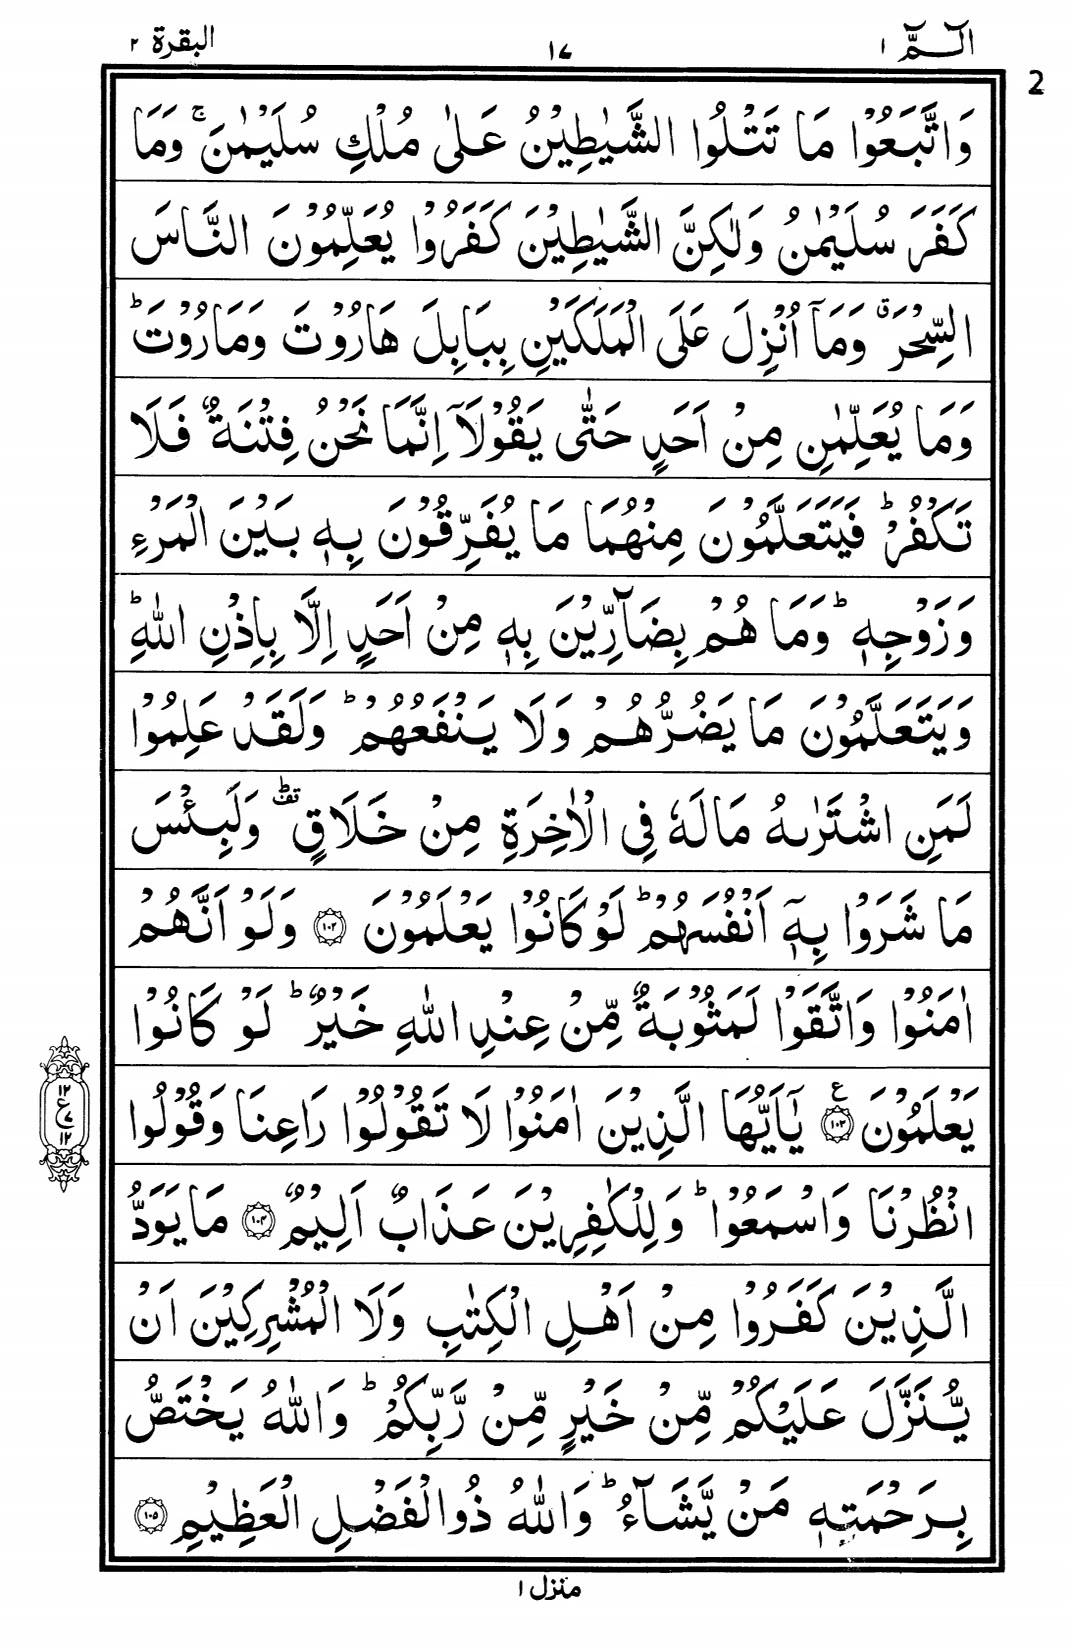 Read Para 1 Online Arabic Quran